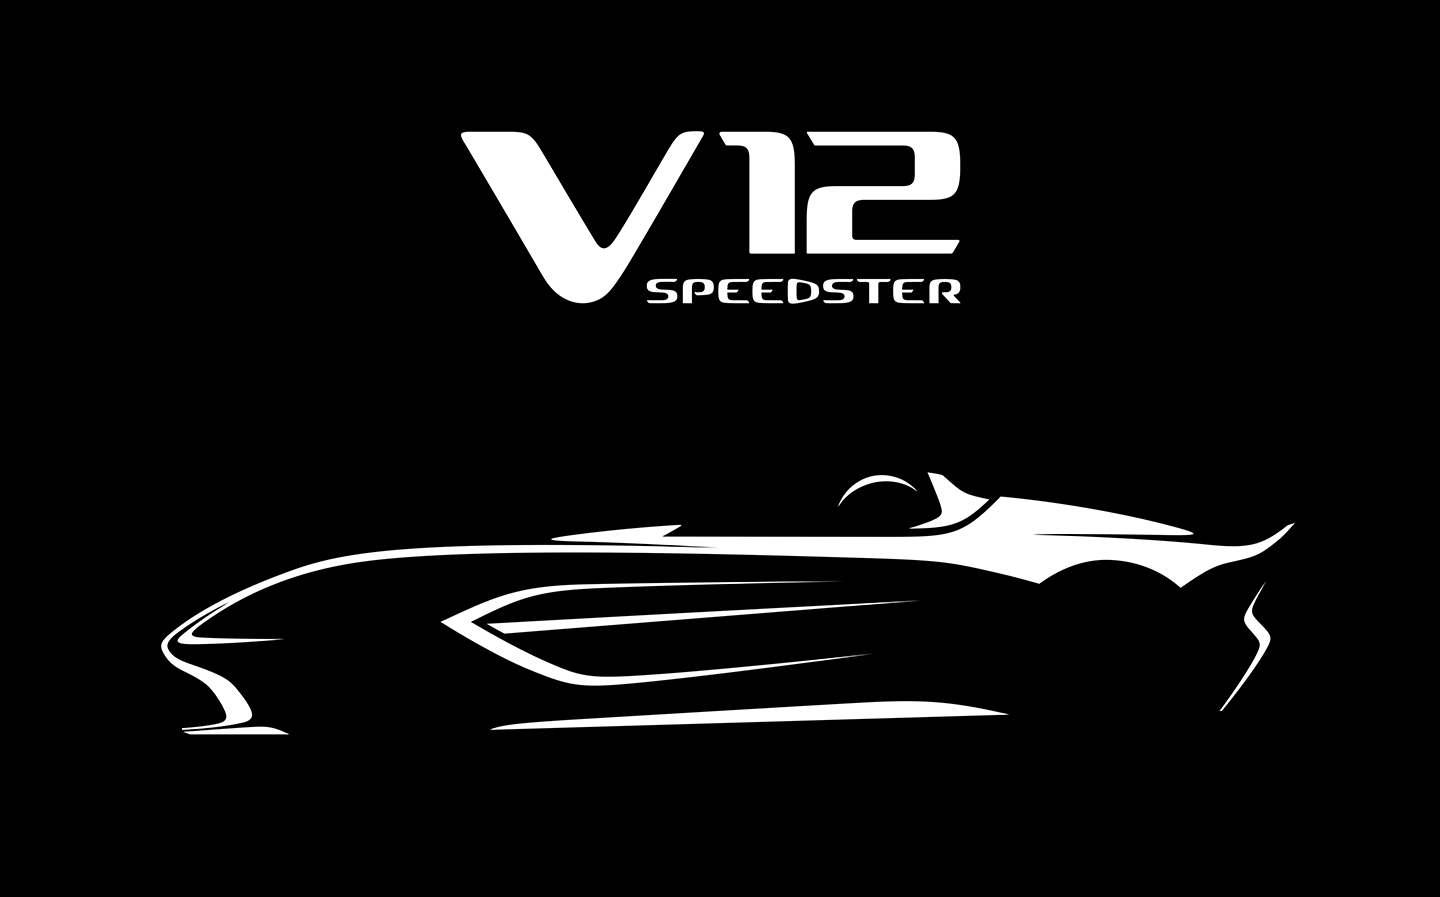 Aston Martin confirms V12 Speedster, inspired by 1959 Le Mans-winning DBR1